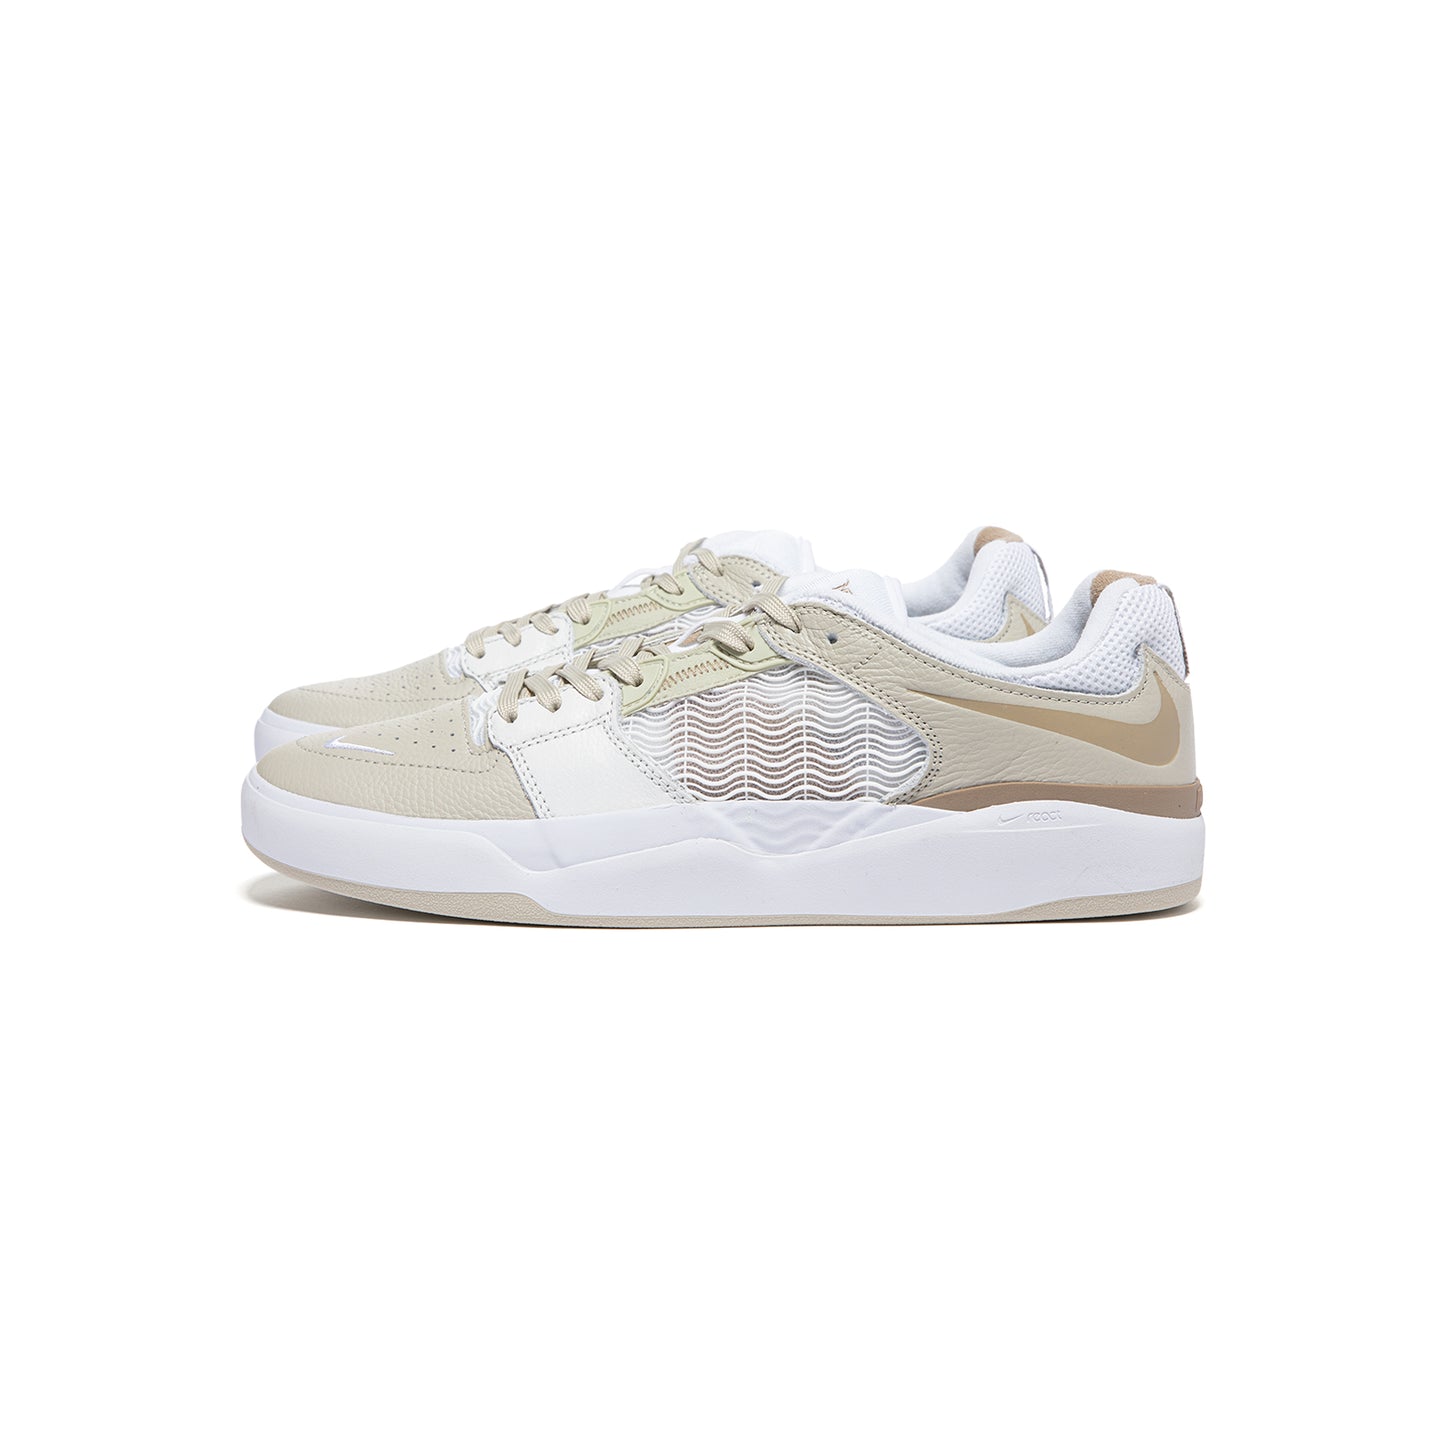 Nike SB Ishod Wair Premium (Light Stone/Khaki/Summit White)